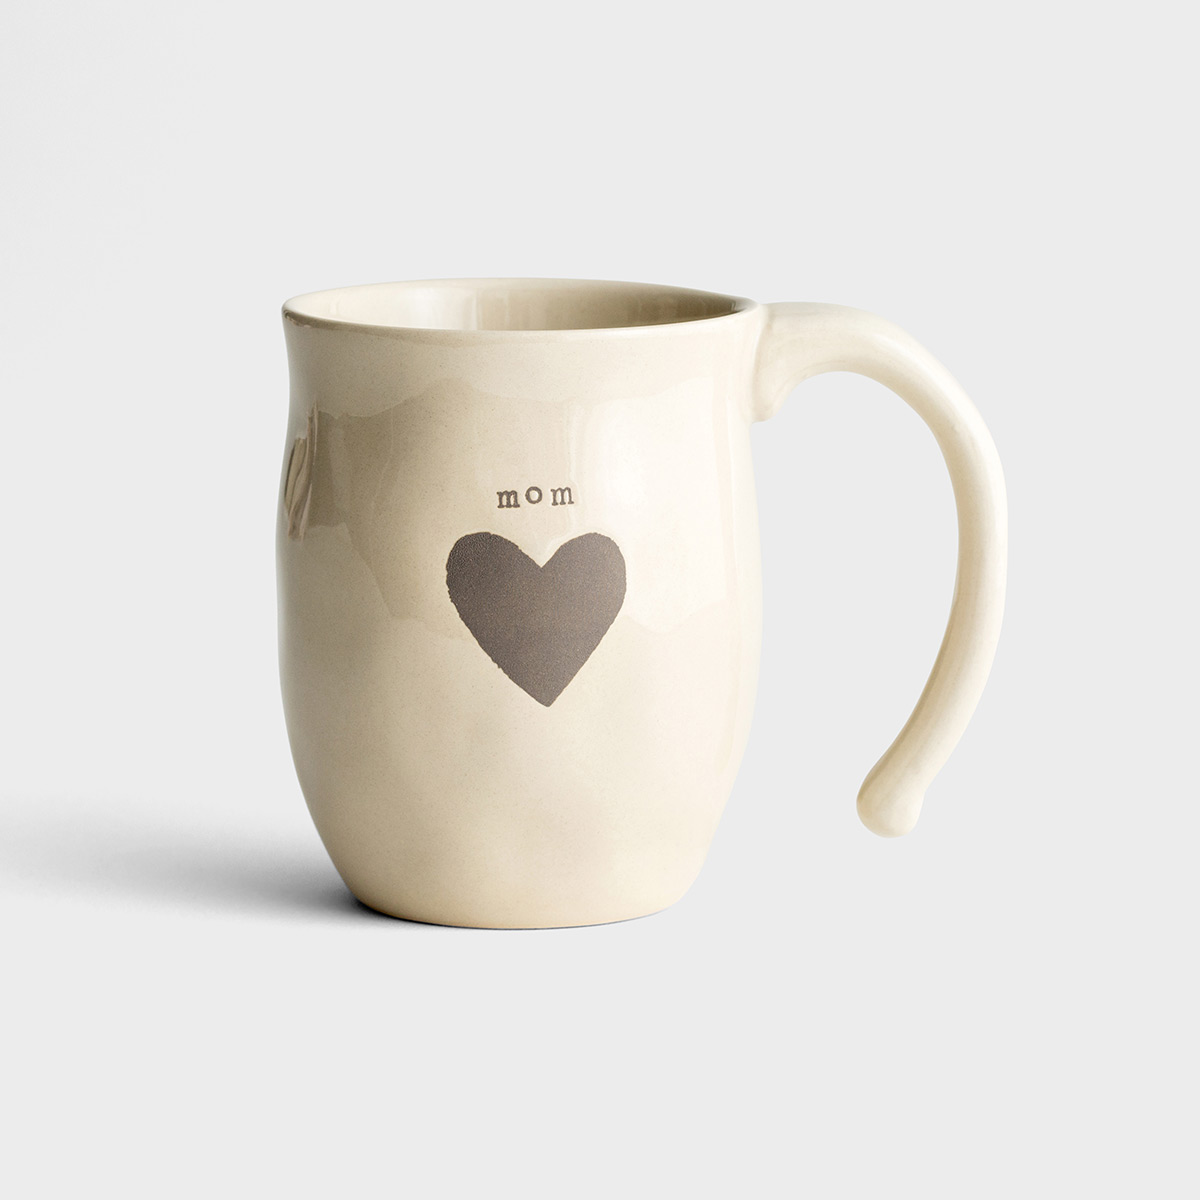 Mom - Stoneware Mug